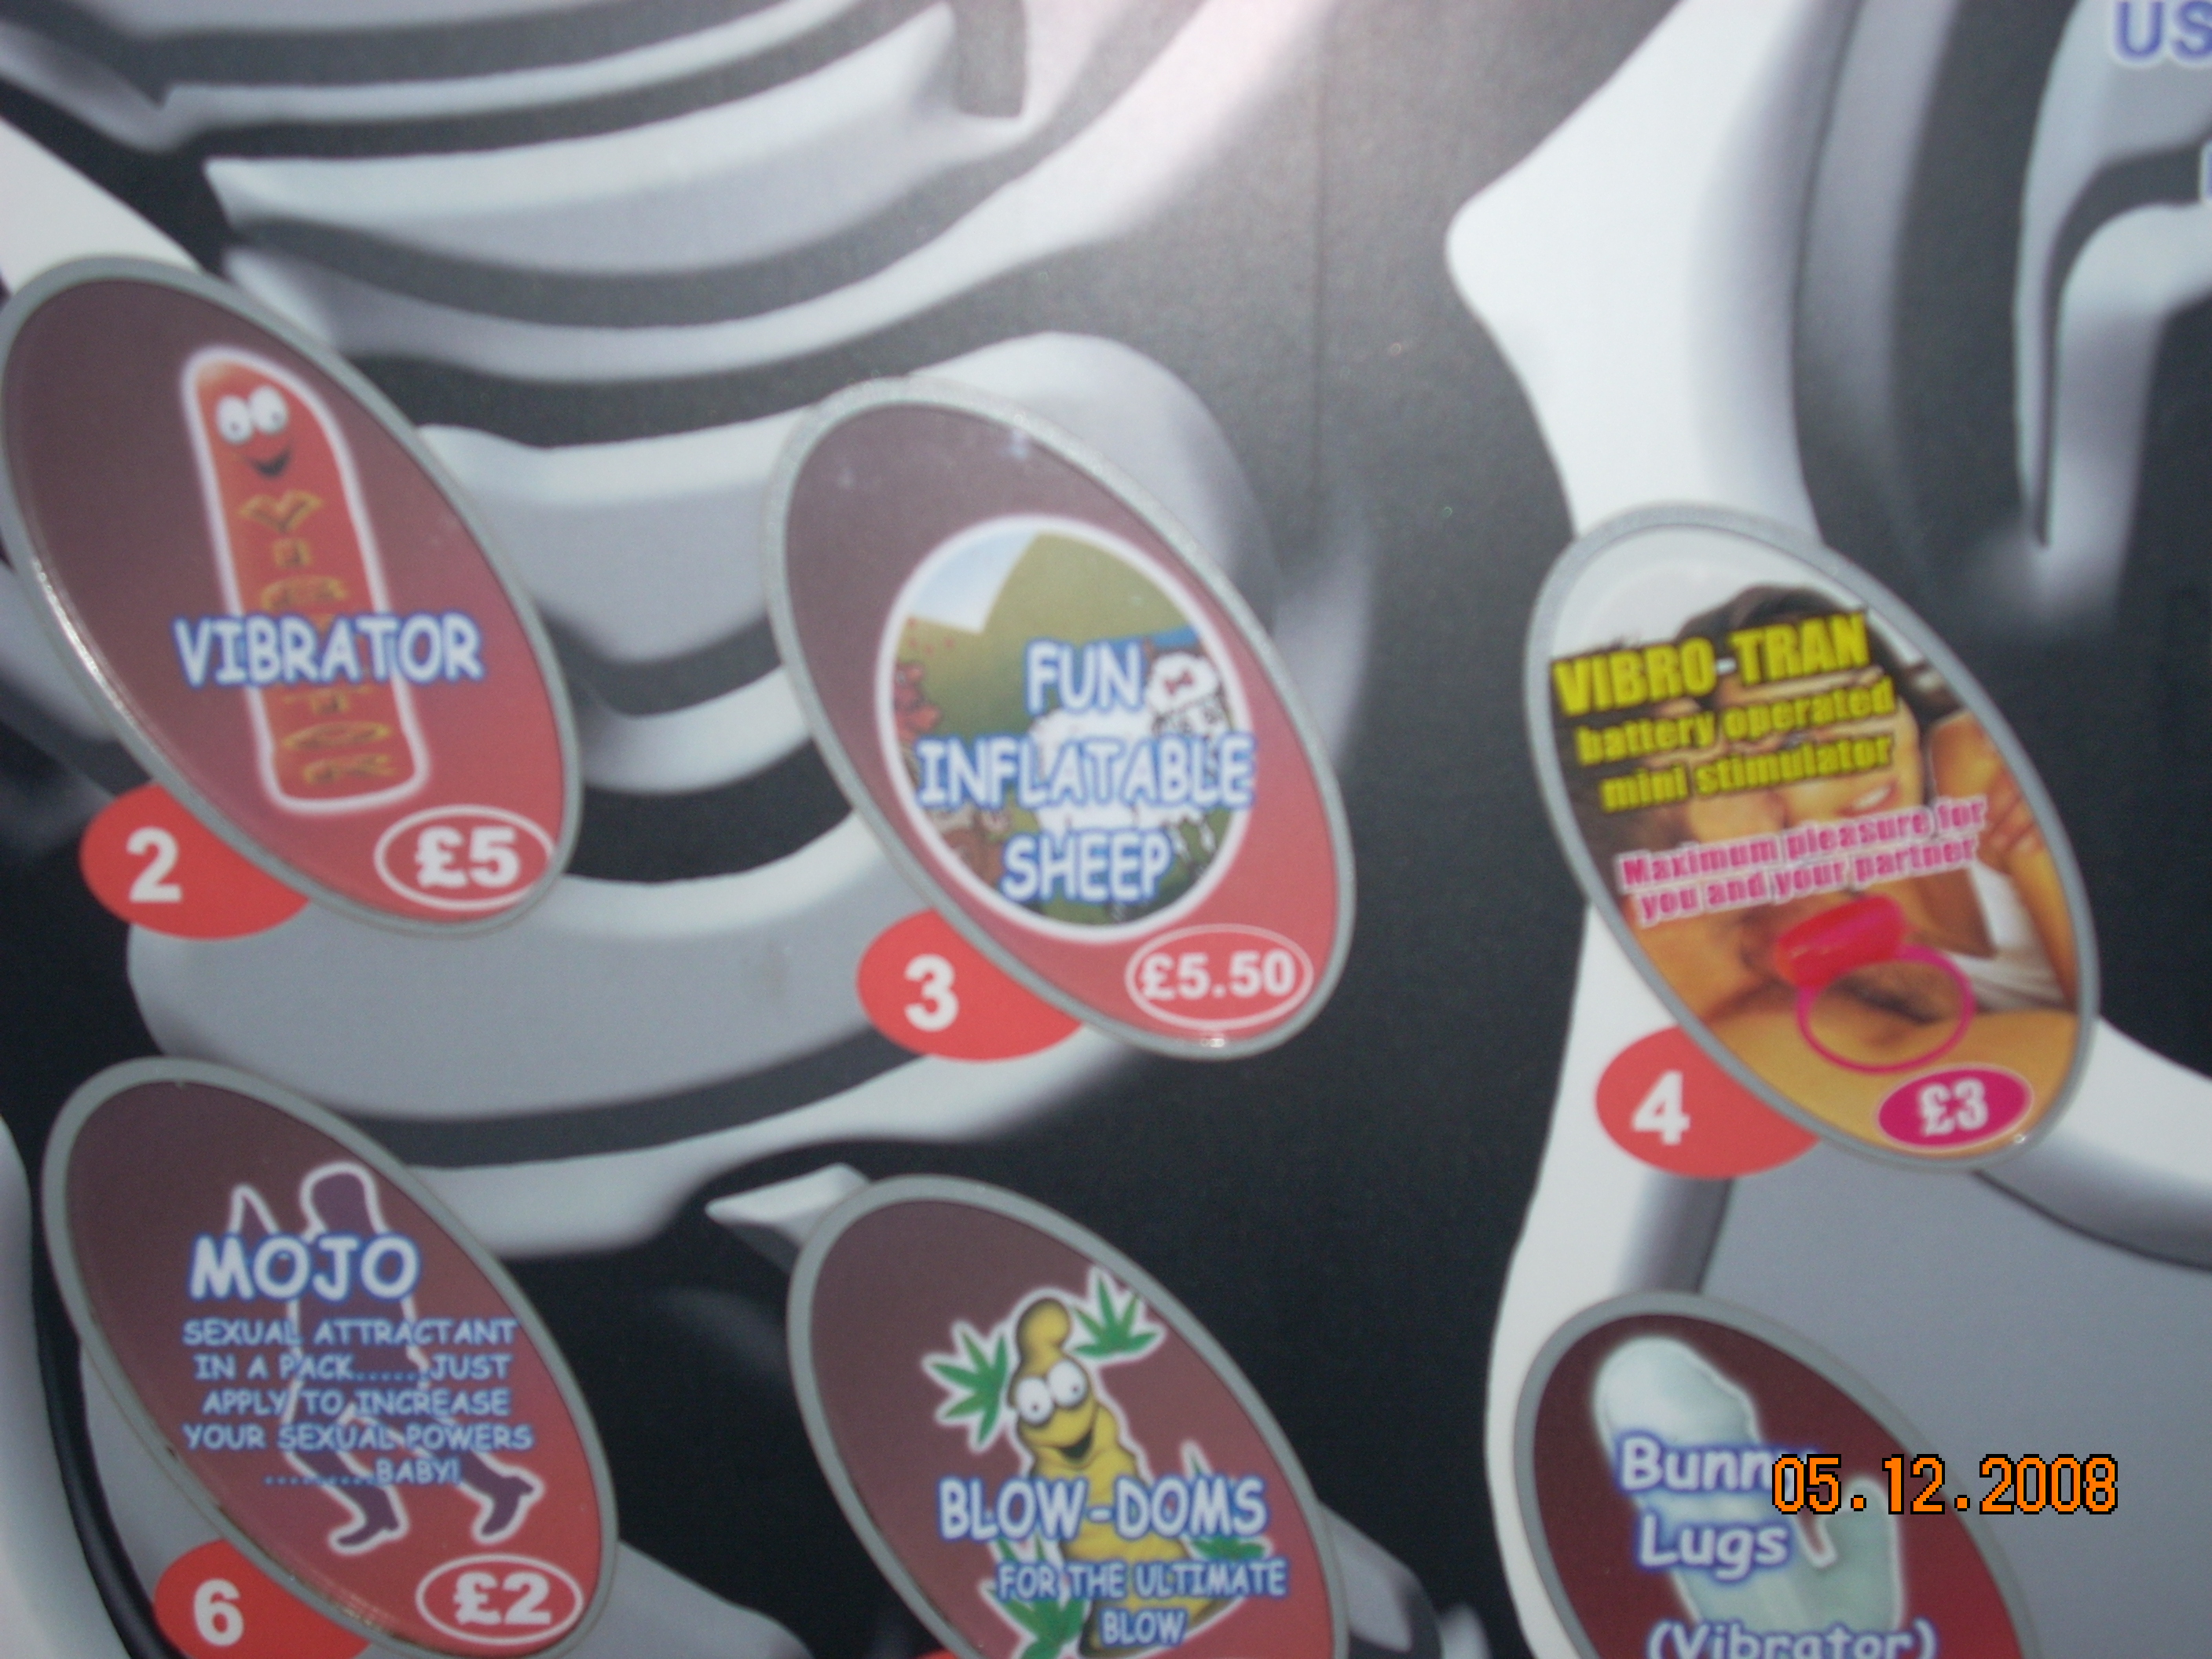 Found this condom vending machine in a Pub in Scotland.